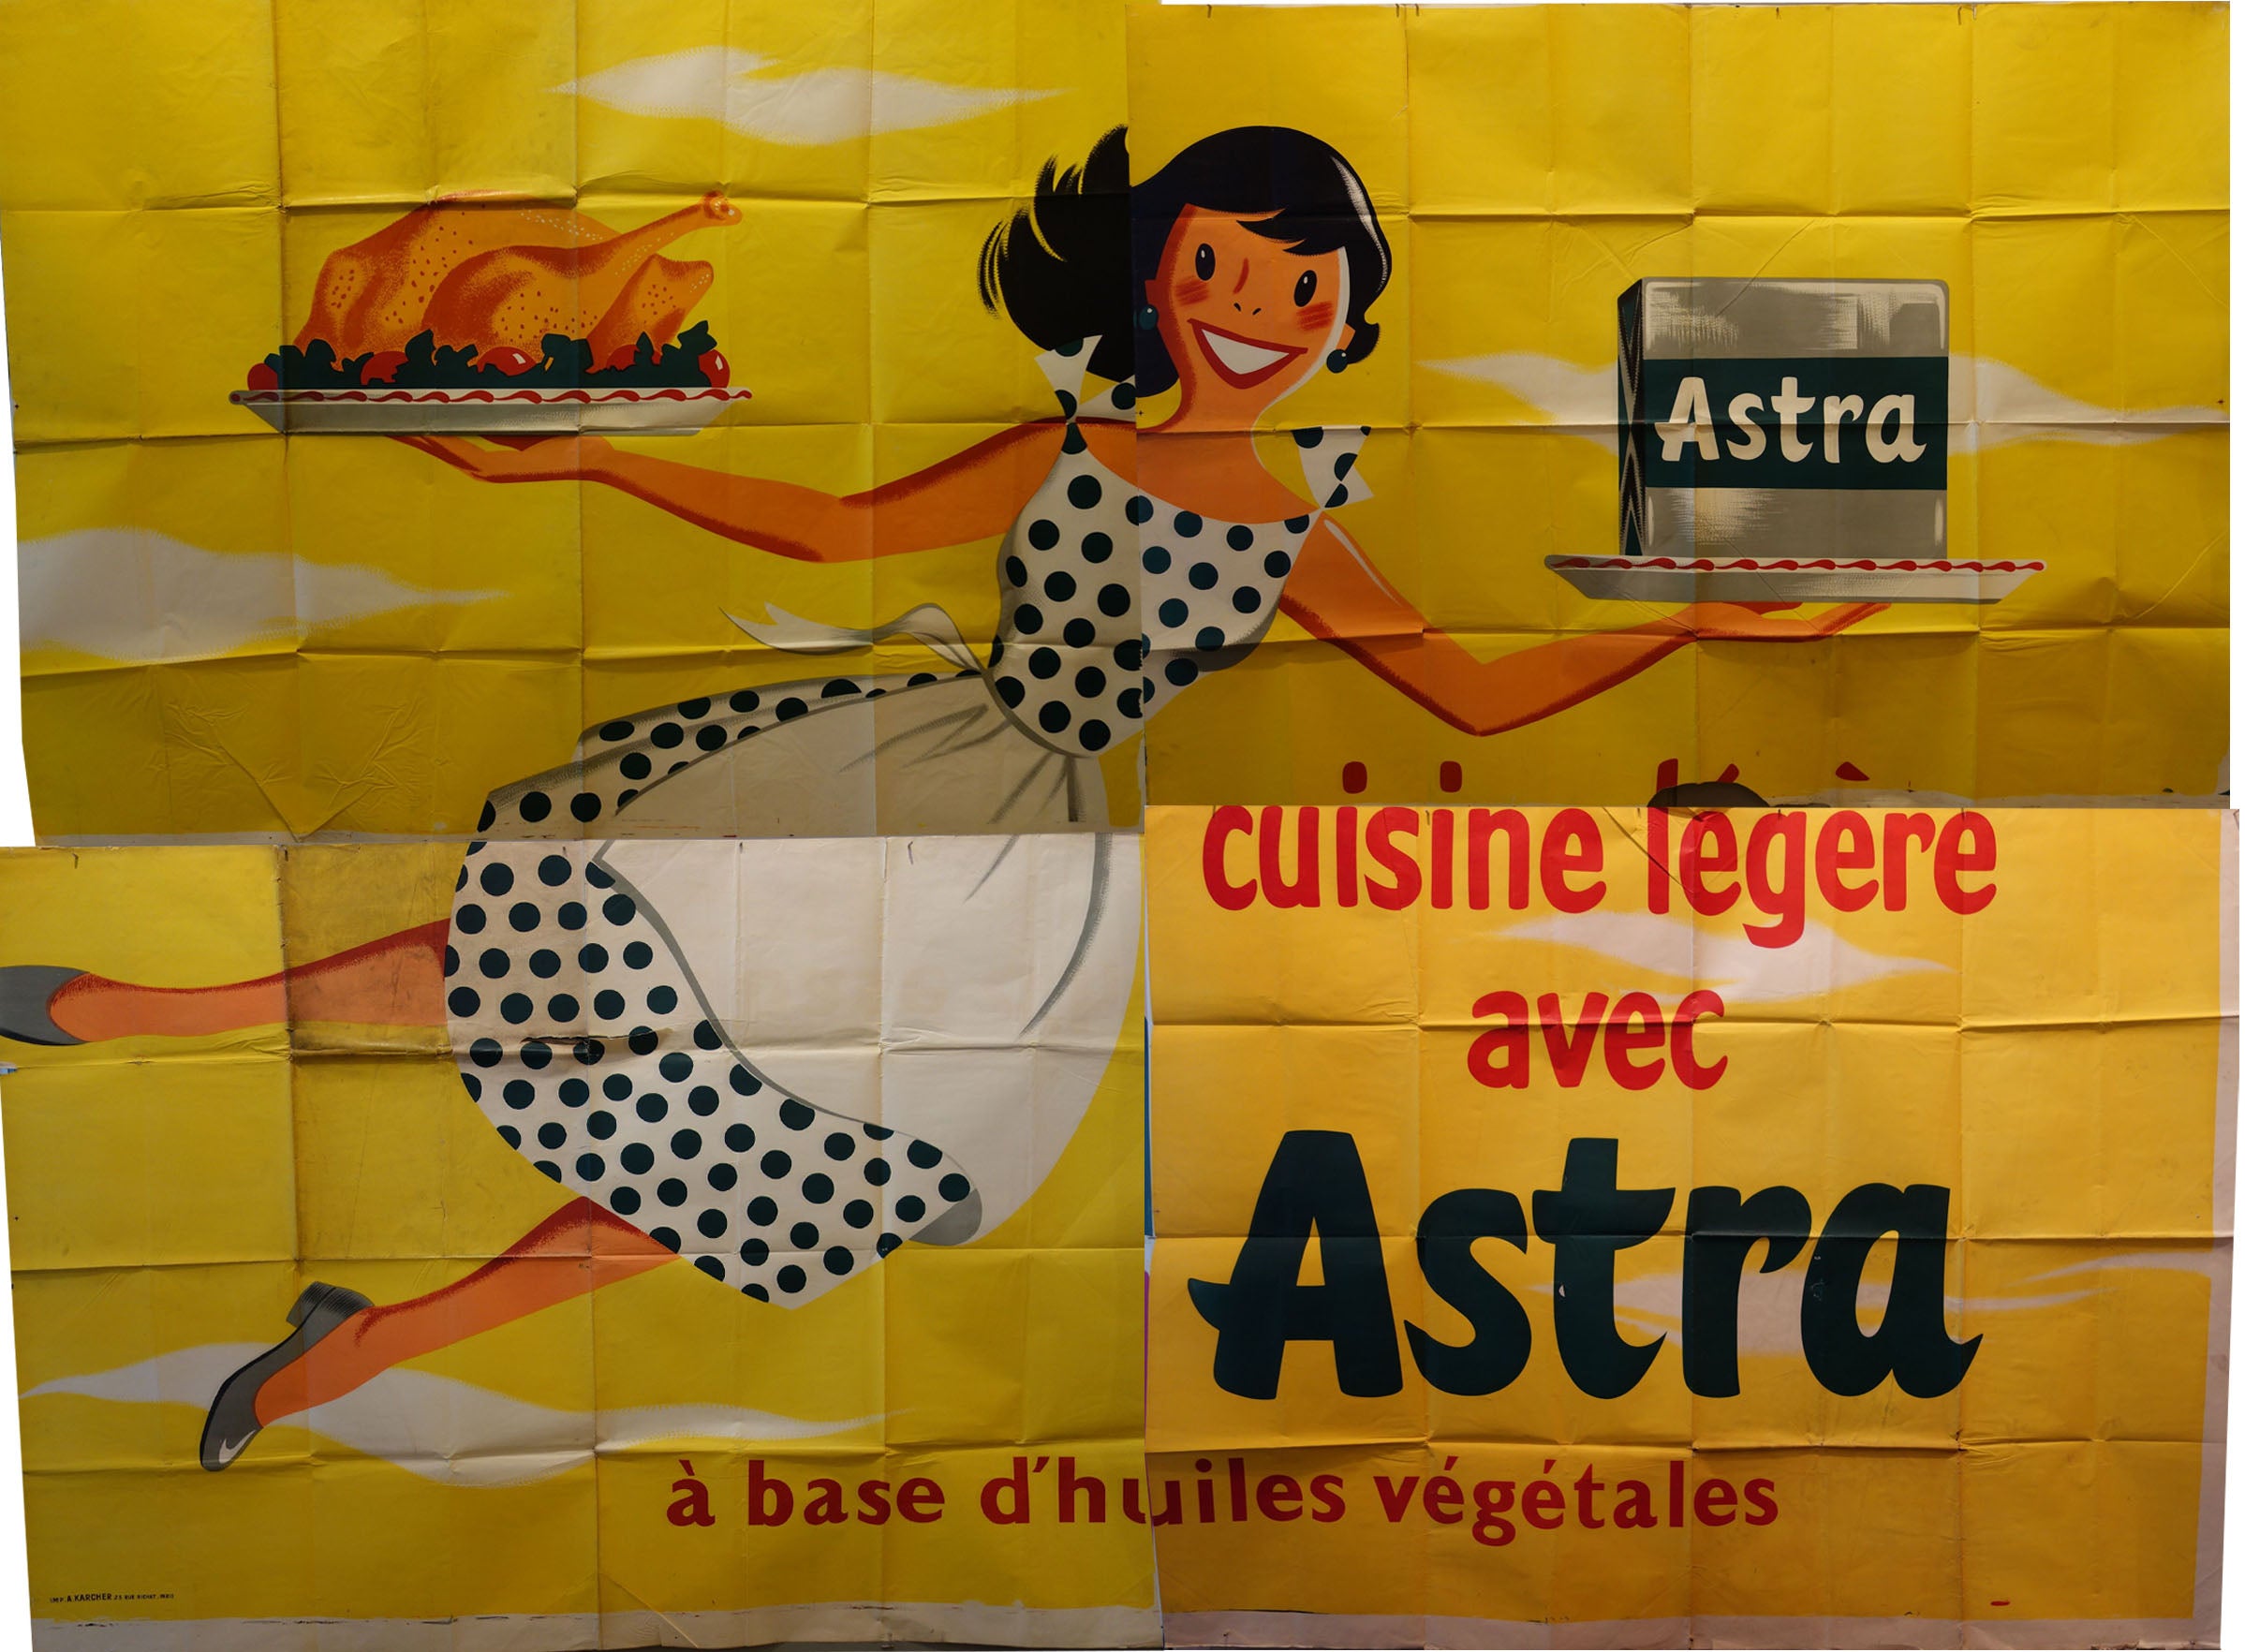 Astra - vegetable oil